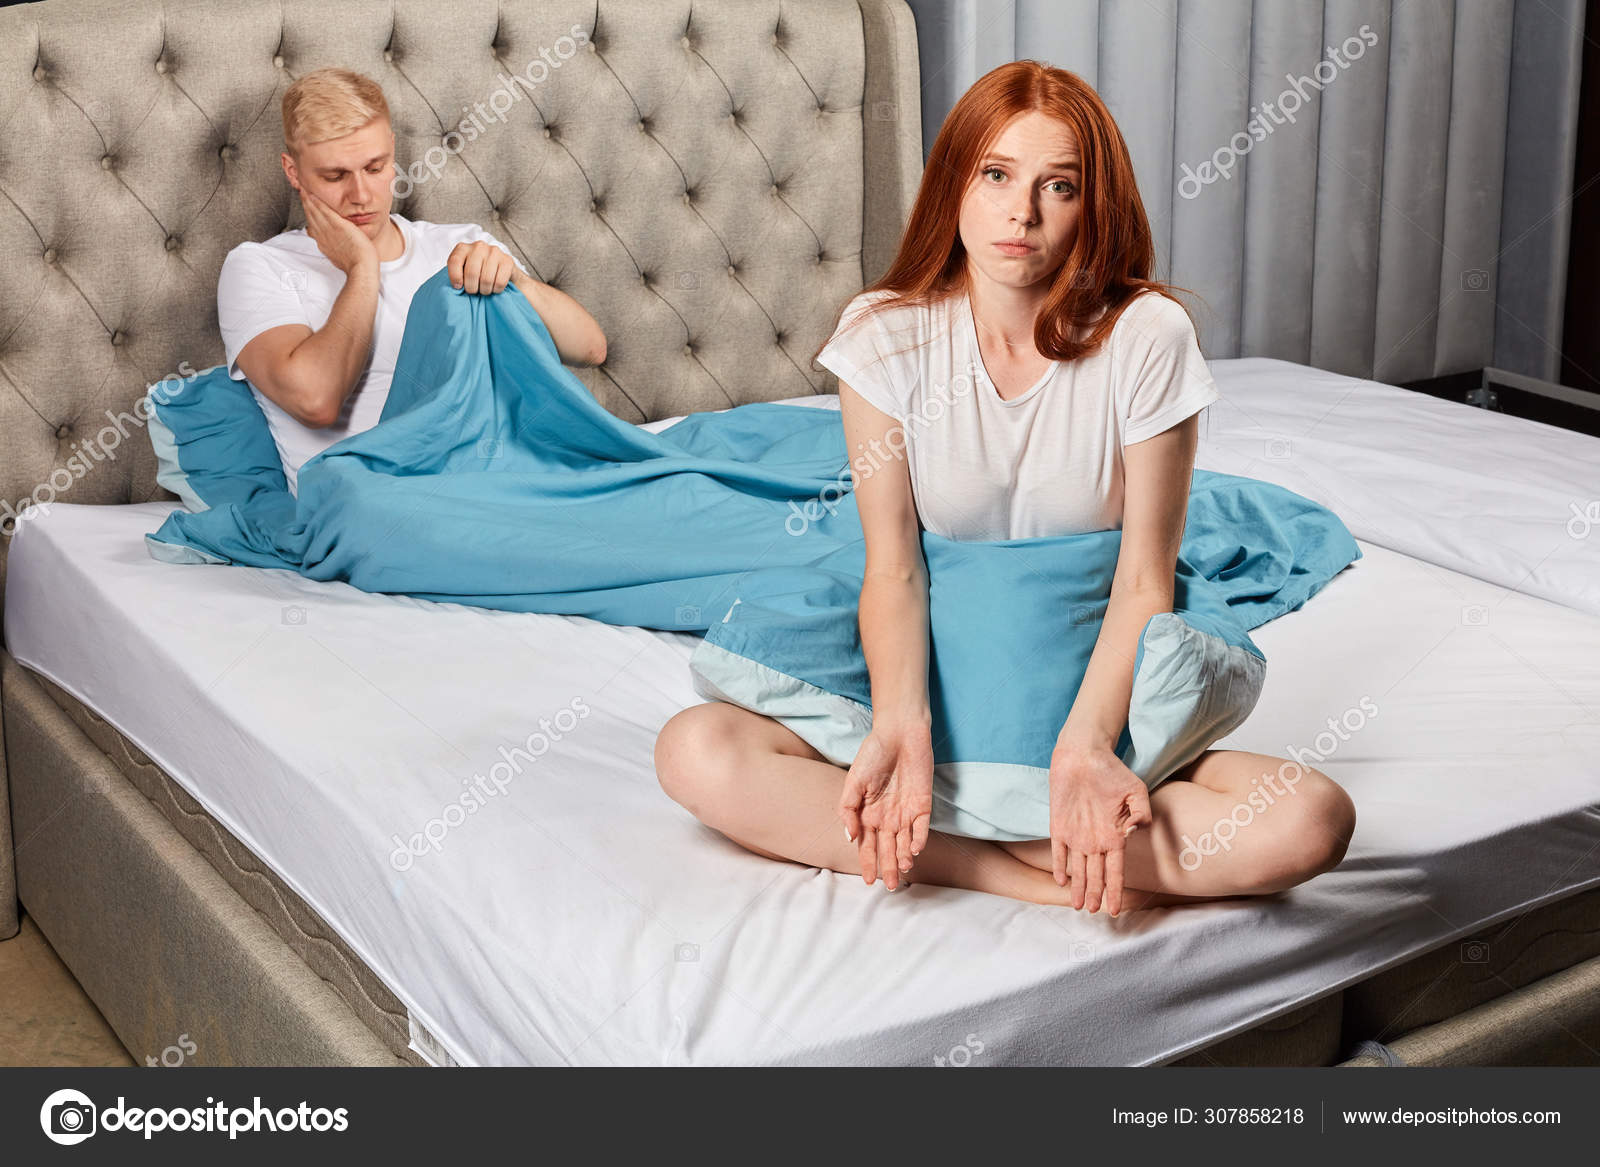 girlfriend in bedroom with boy cock